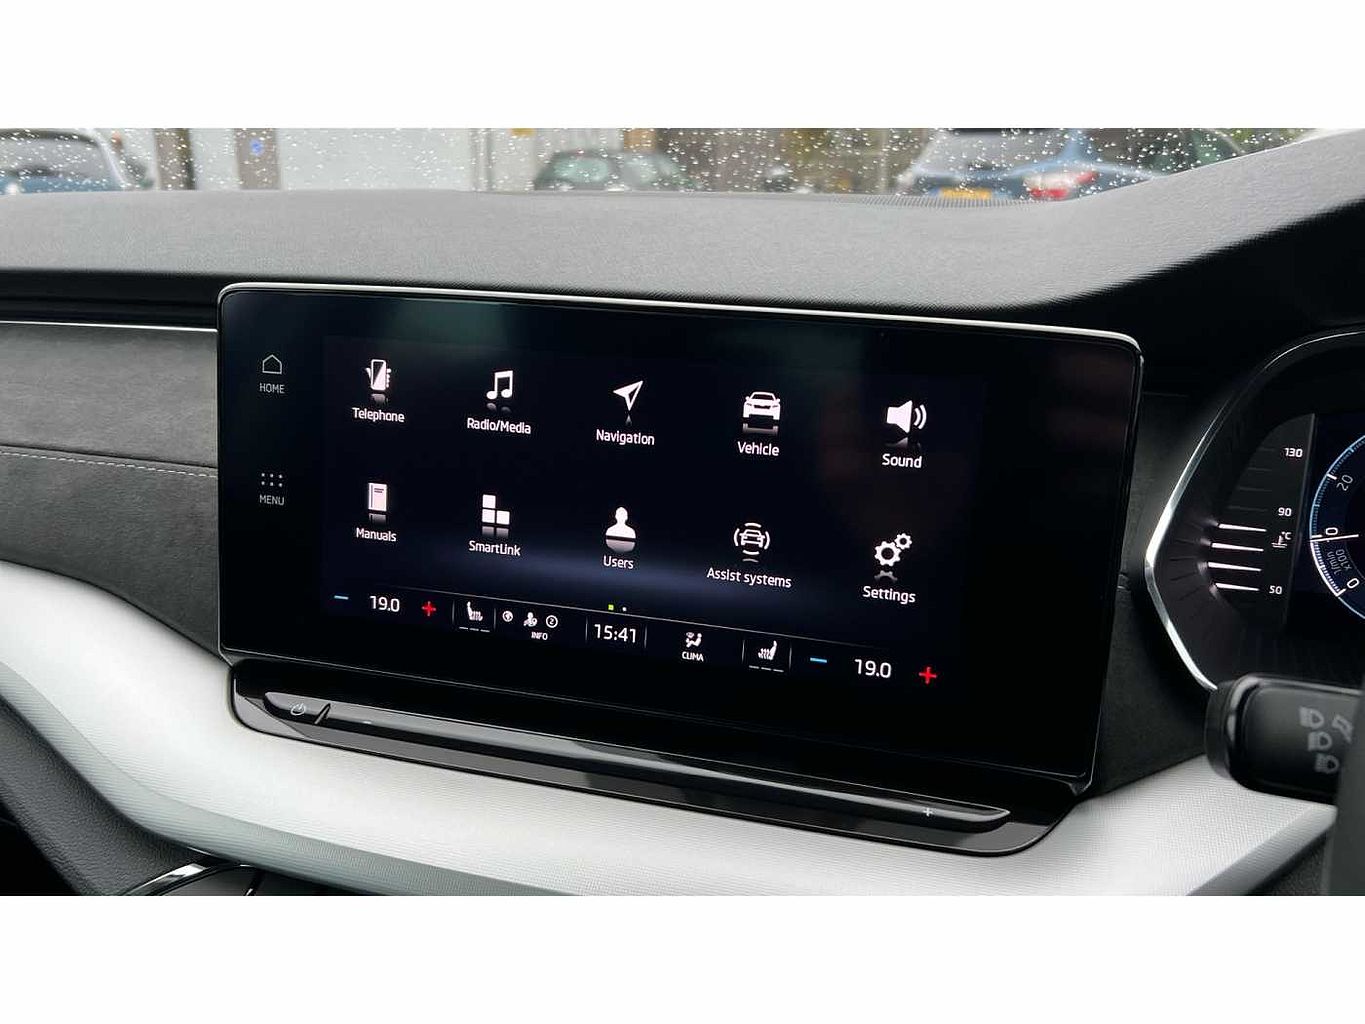 SKODA Octavia Hatchback (2017) 1.5 TSI ACT SE L (150PS)